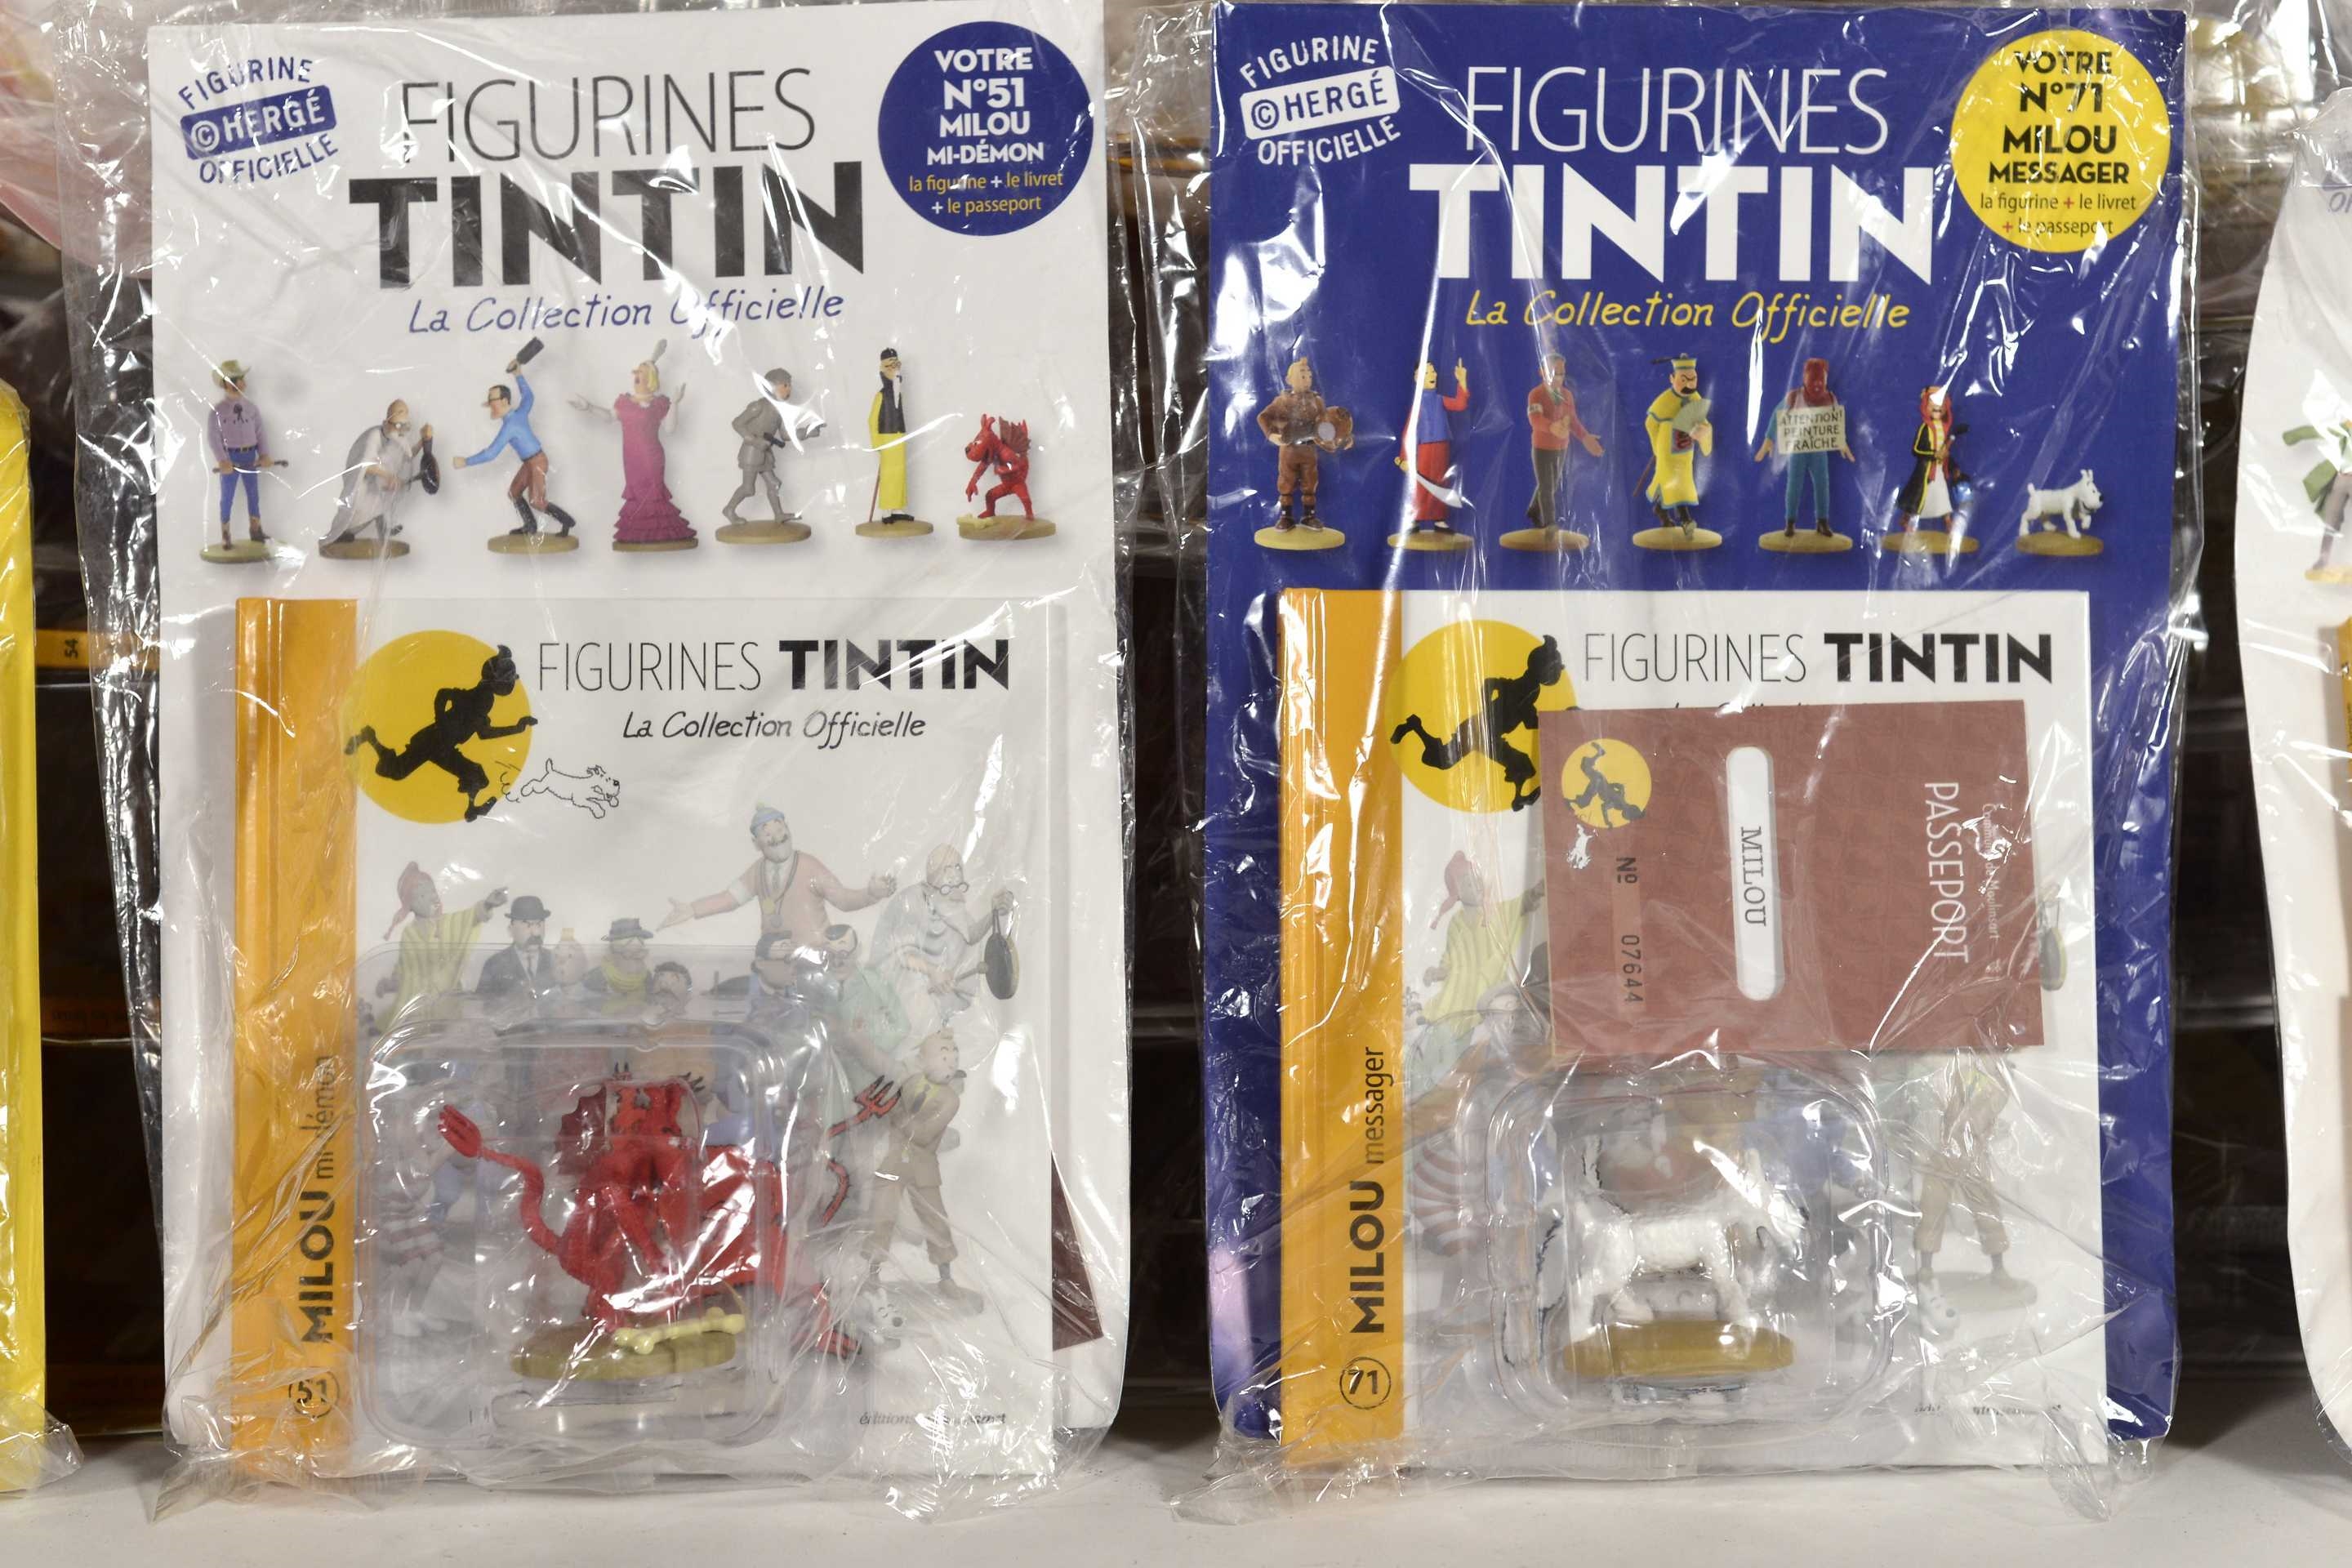 FIGURINES TINTIN - LA COLLECTION OFFICIELLE #1 - Tintin en trench-coat -  Sceneario